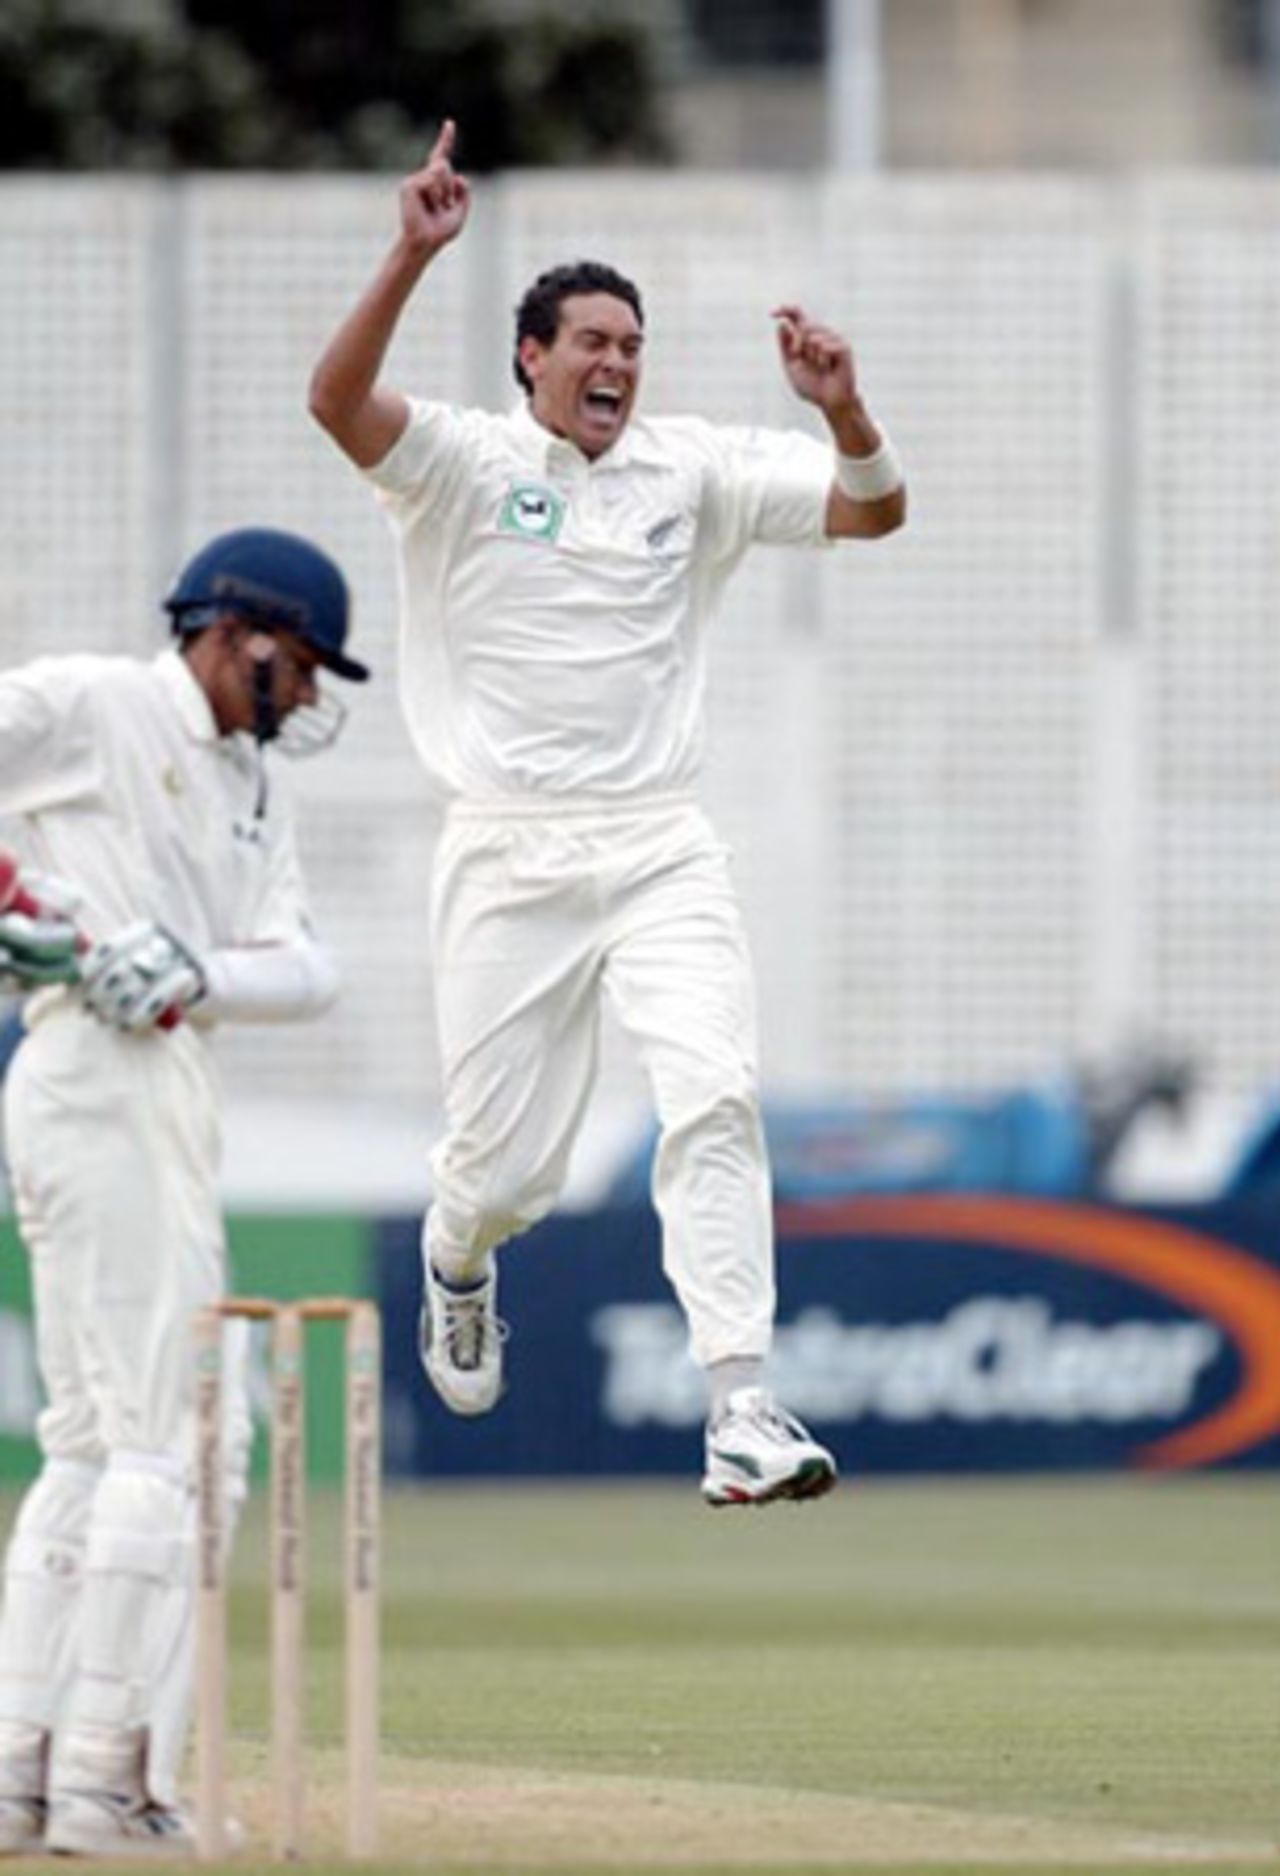 New Zealand bowler Daryl Tuffey celebrates the dismissal of Indian batsman Sanjay Bangar, caught by Scott Styris at third slip for one. 1st Test: New Zealand v India at Basin Reserve, Wellington, 12-16 December 2002 (12 December 2002).